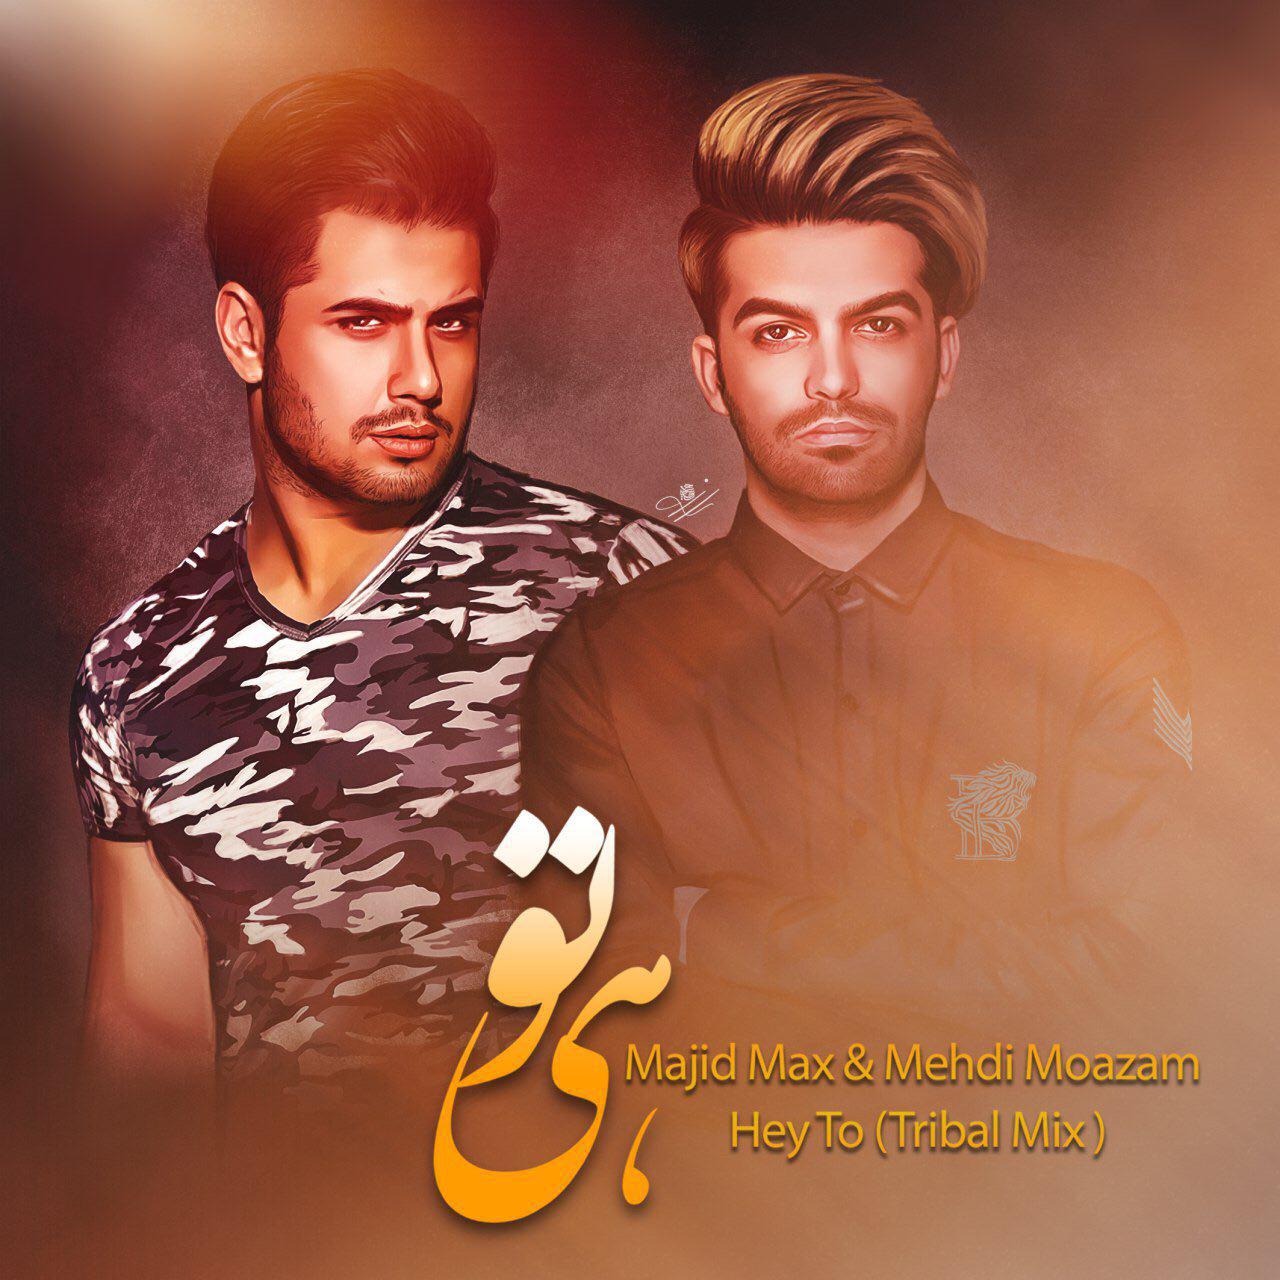 Majid Max & Mehdi Moazam – Hey To (Tribal Mix)